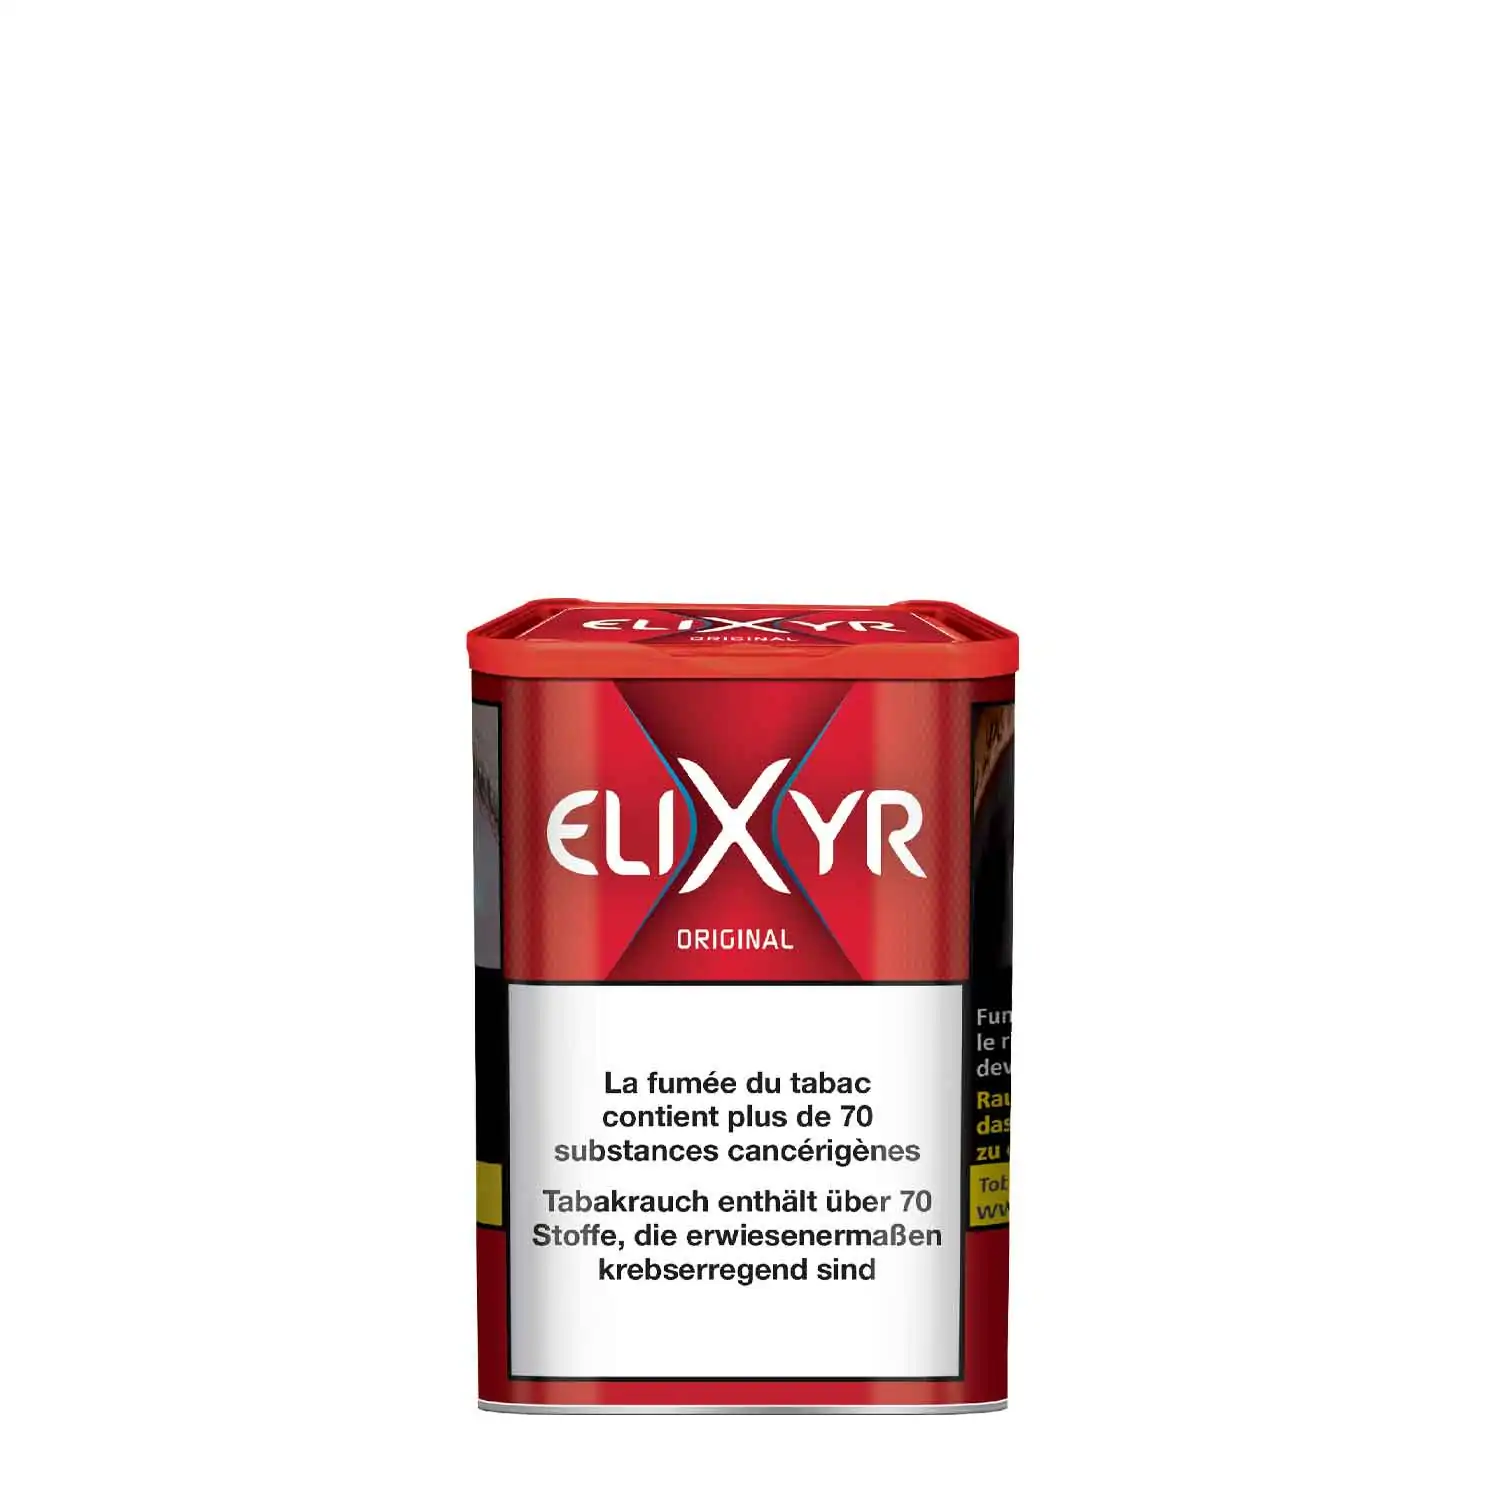 Elixyr original rouge 100g - Buy at Real Tobacco